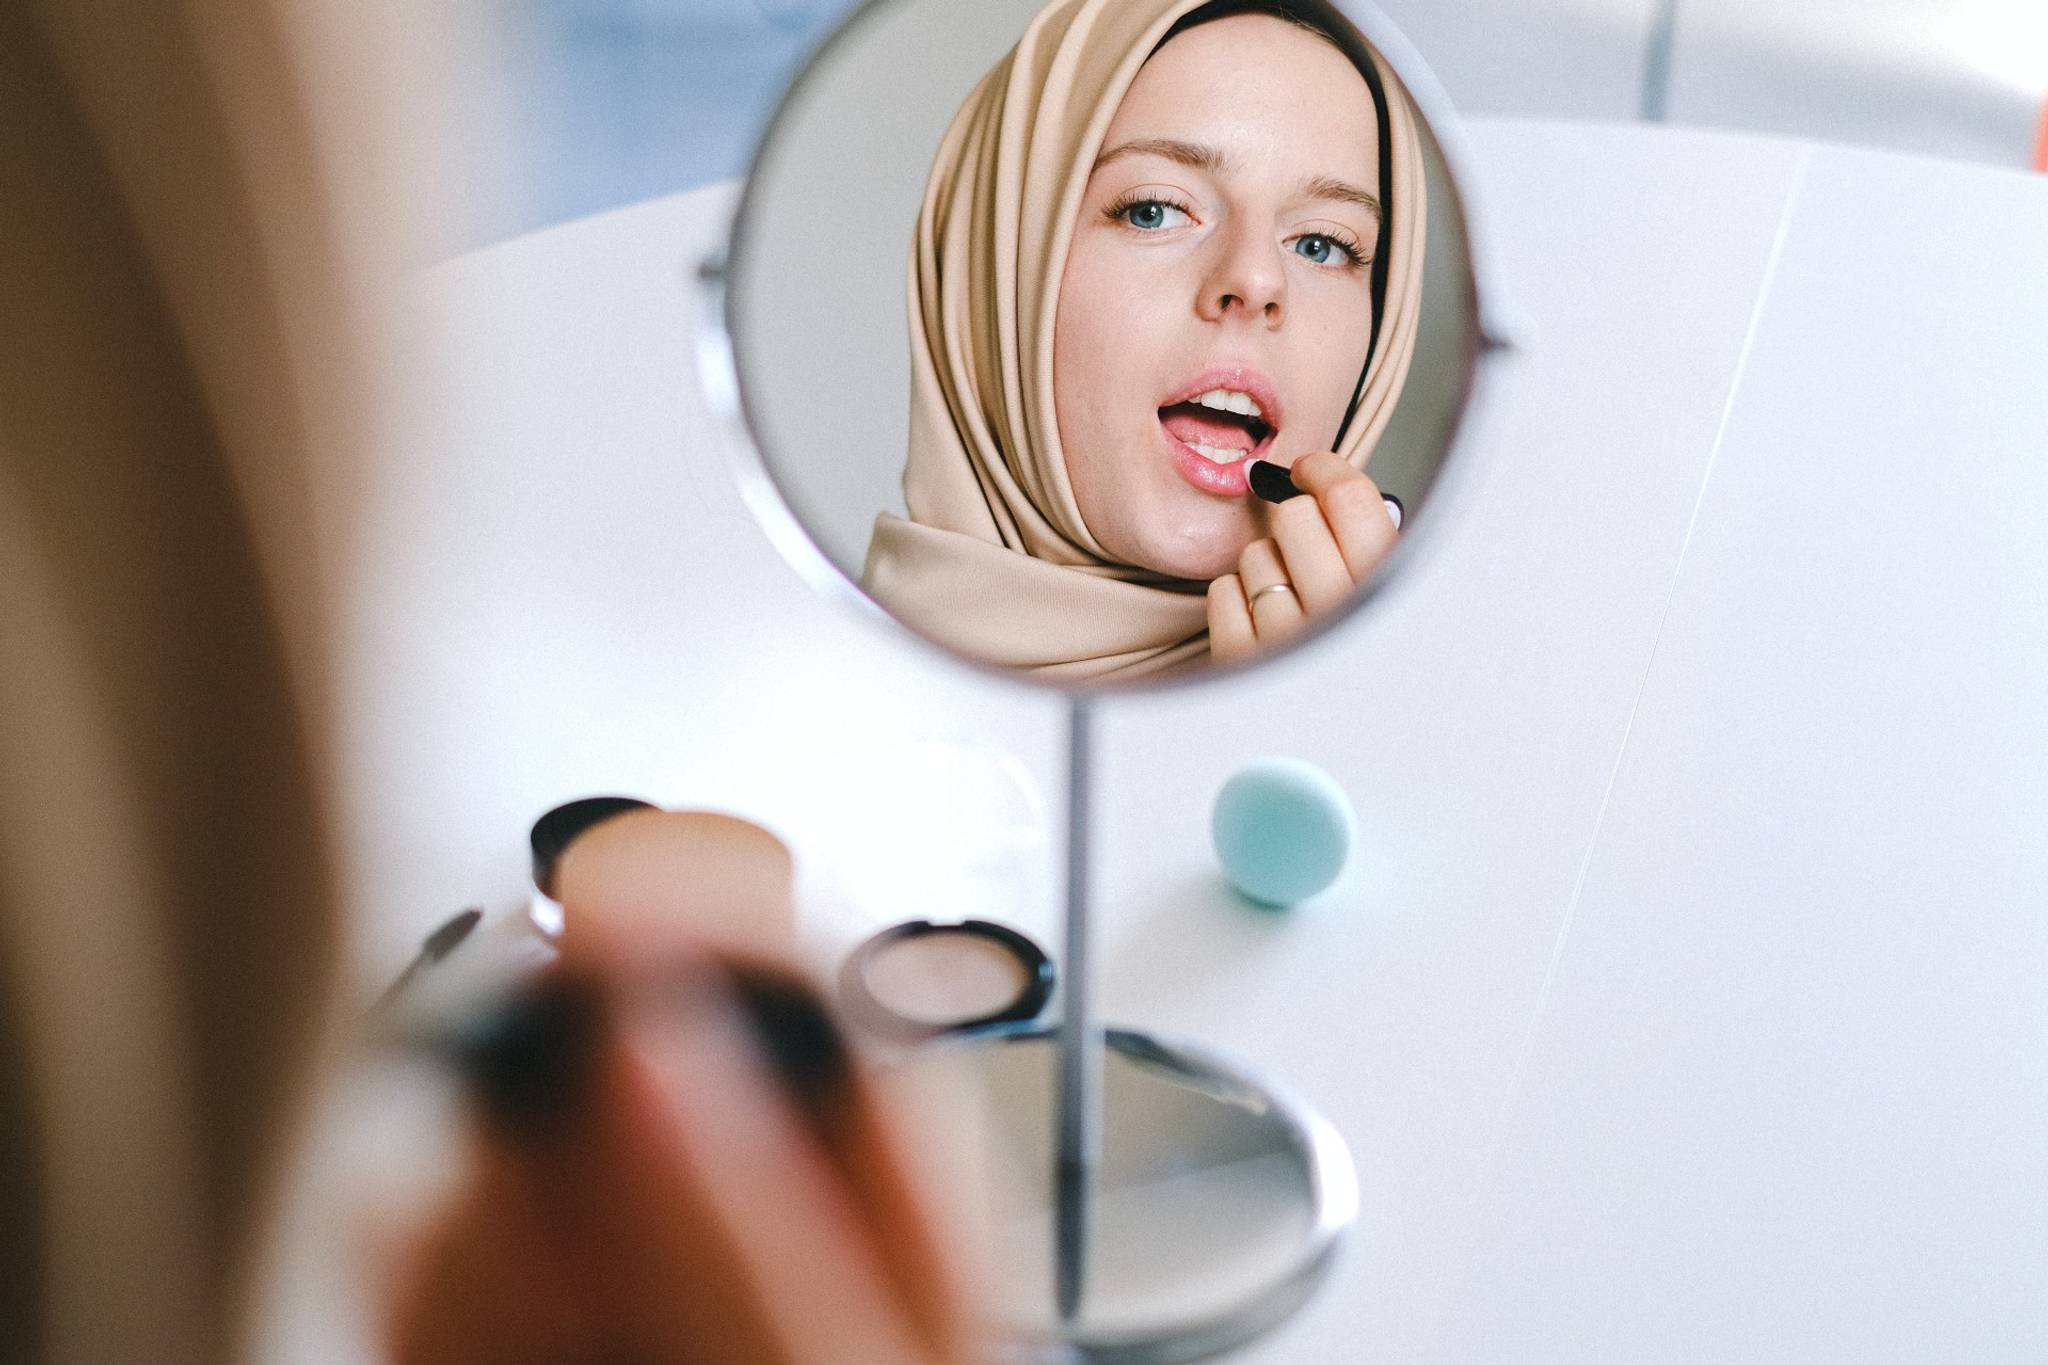 YSL’s bespoke lipstick gadget uses tech to personalise